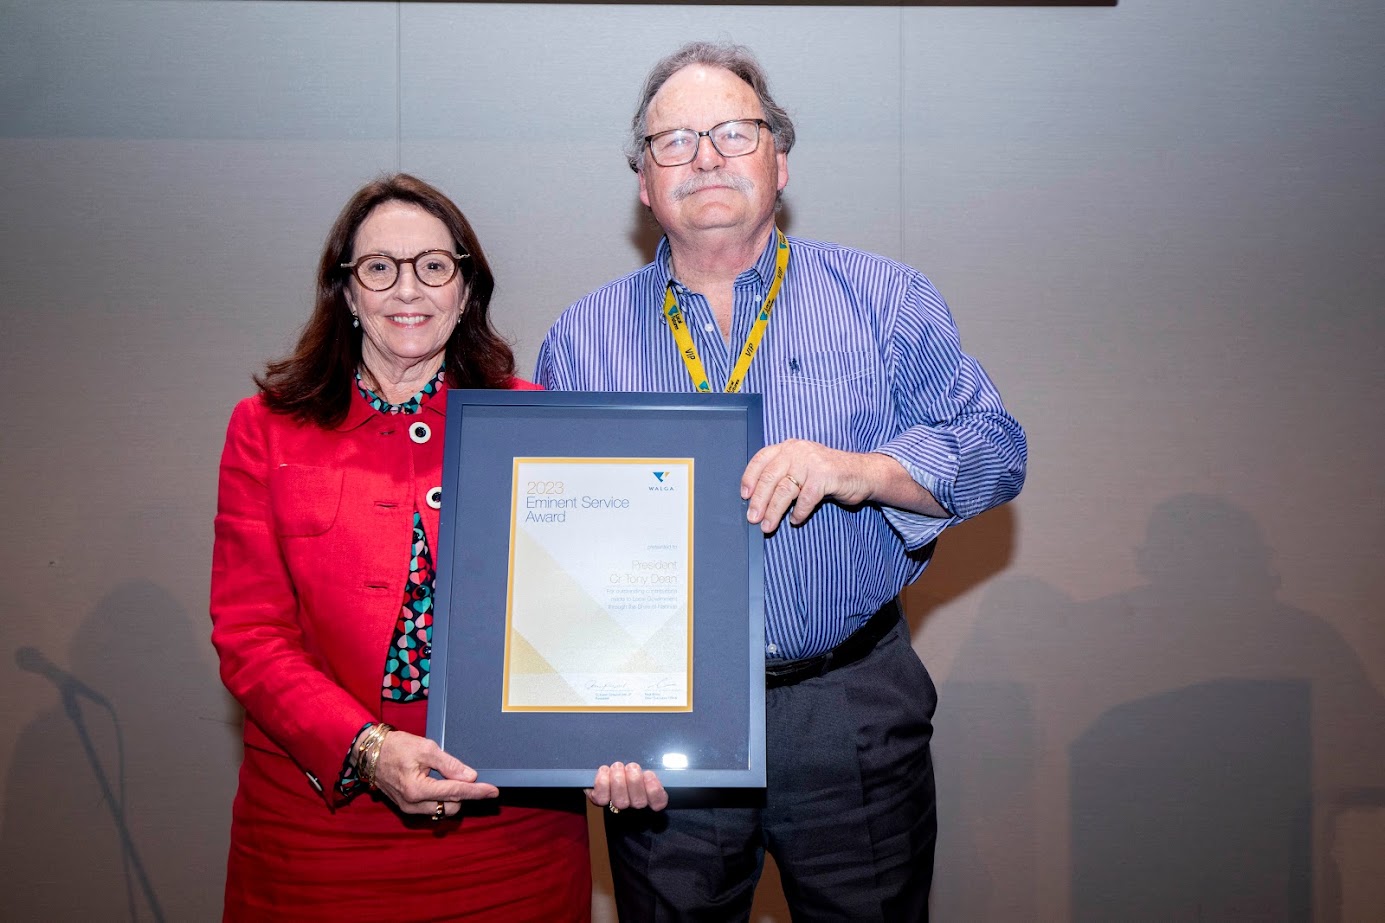 Eminent Service Award presented to Shire President, Tony Dean